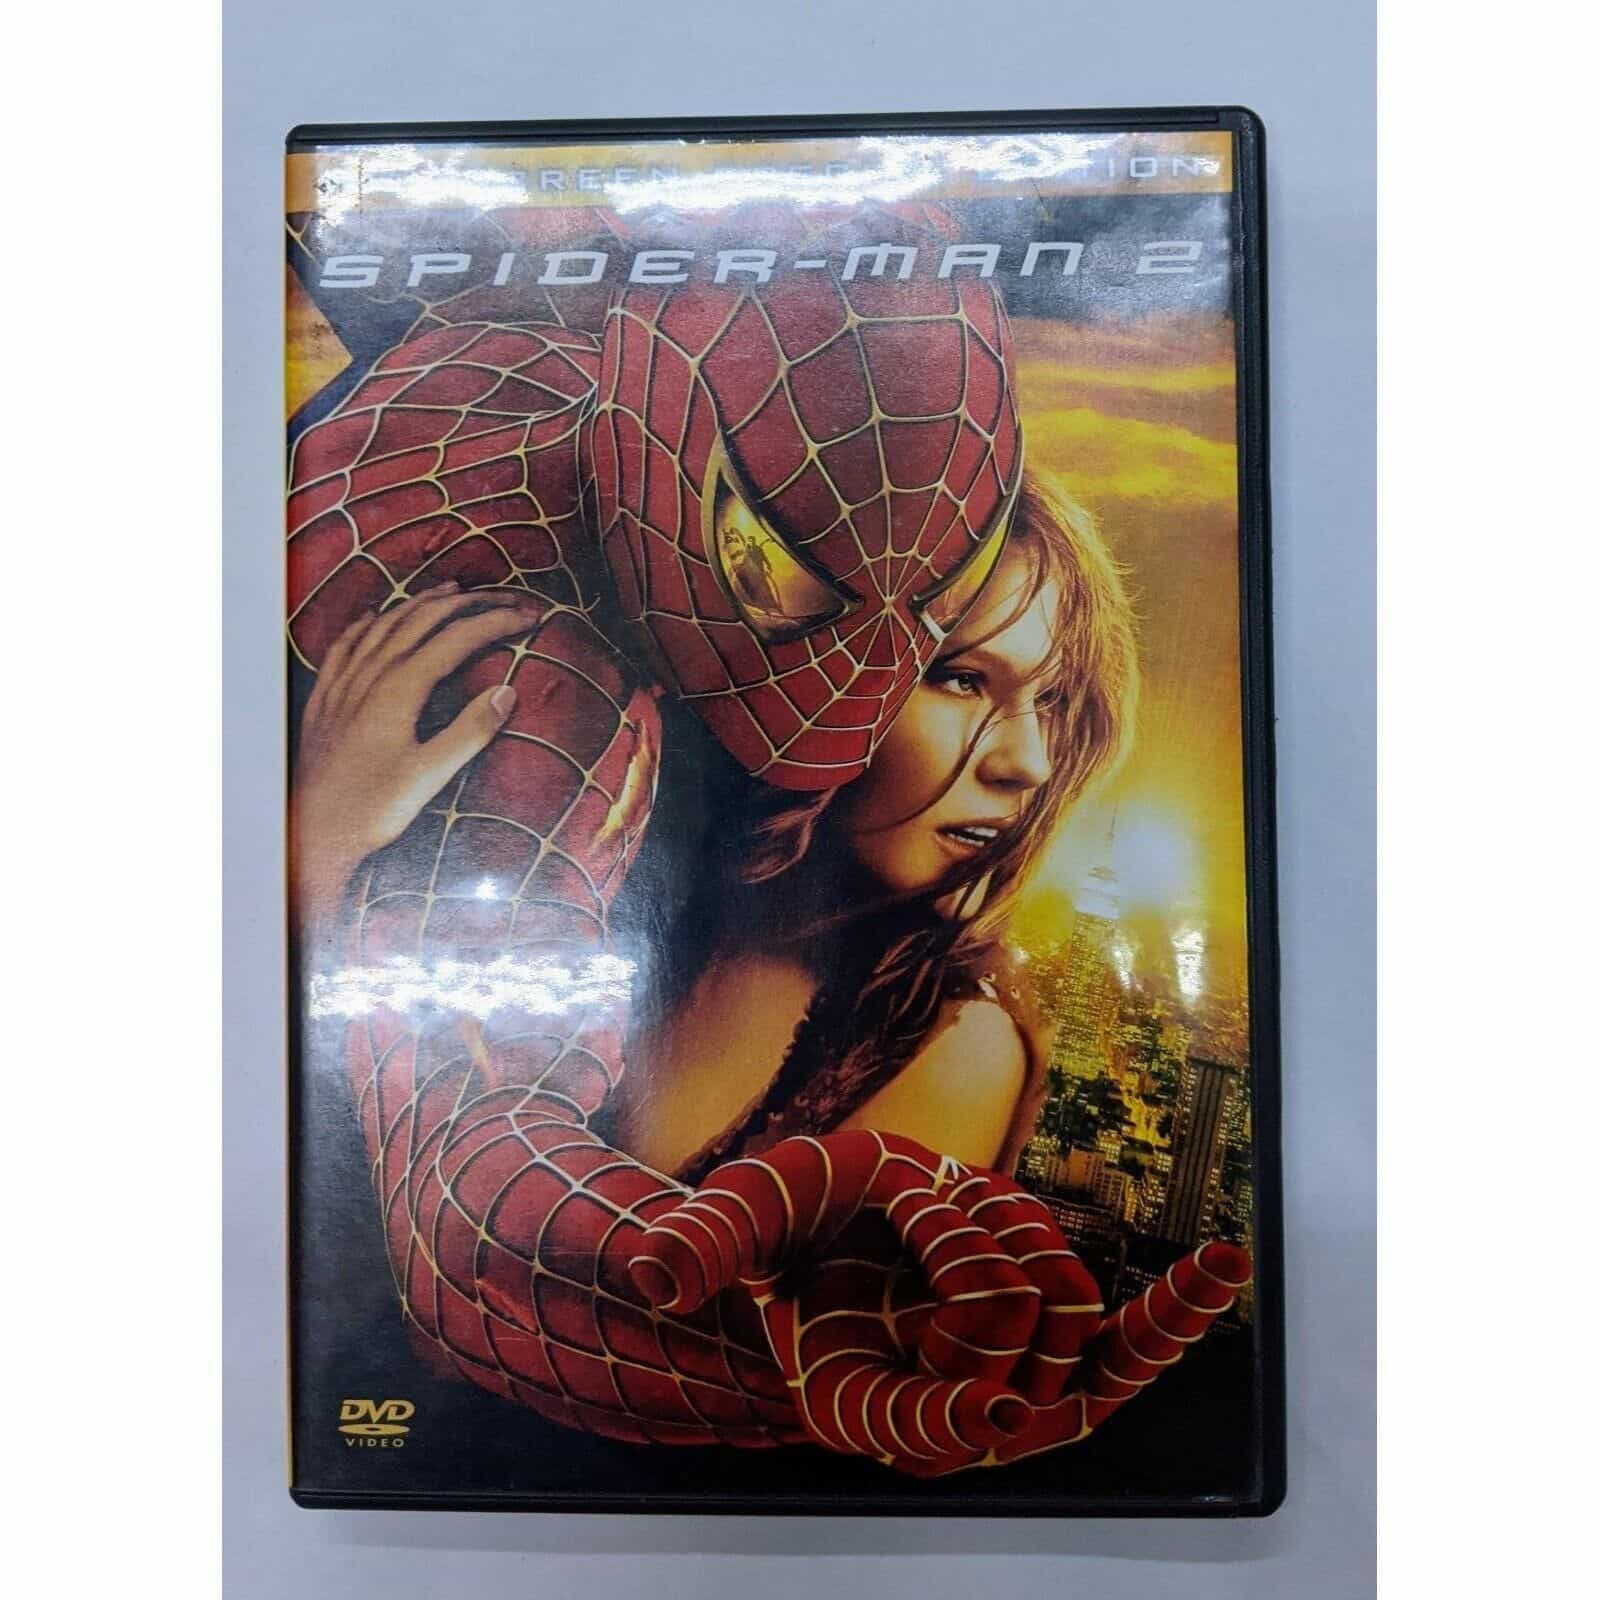 Spider-Man 2 DVD movie – Widescreen Special Edition